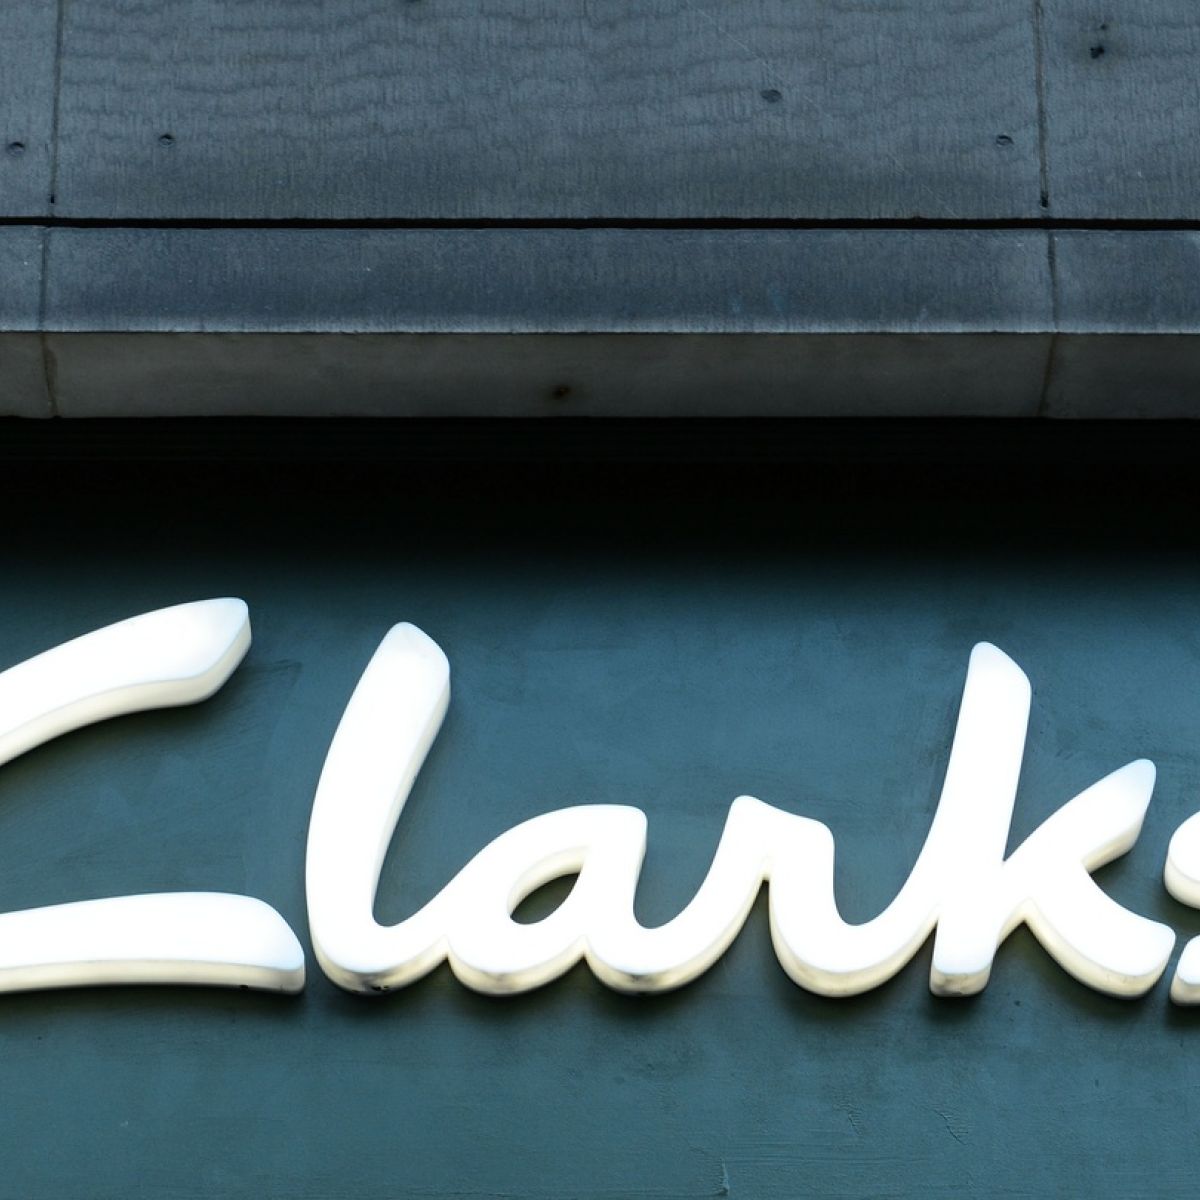 clarks stores ireland